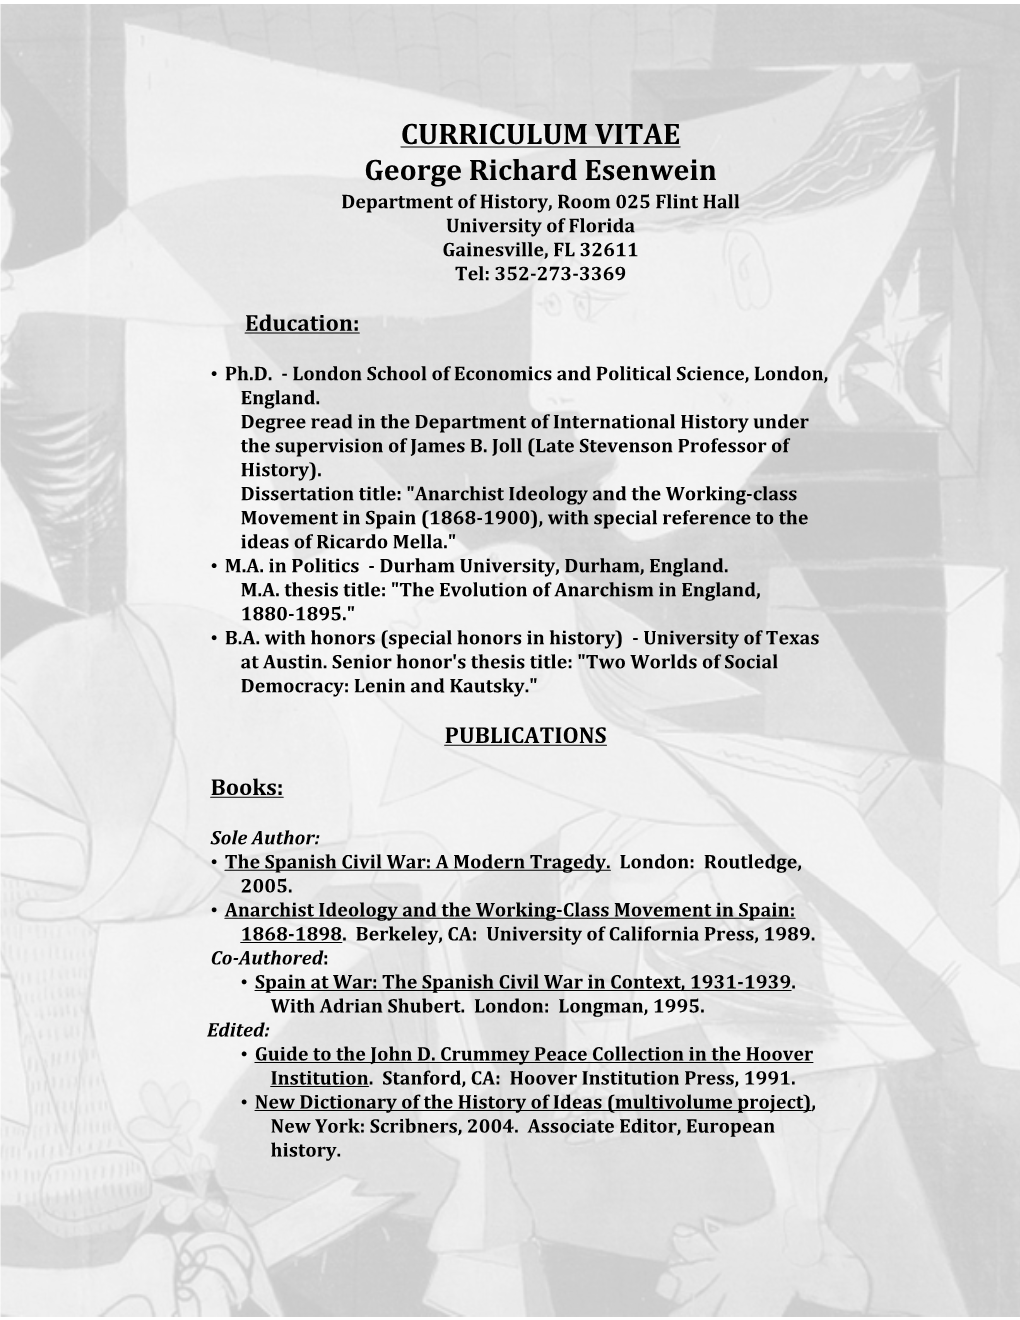 CURRICULUM VITAE George Richard Esenwein Department of History, Room 025 Flint Hall University of Florida Gainesville, FL 32611 Tel: 352-273-3369